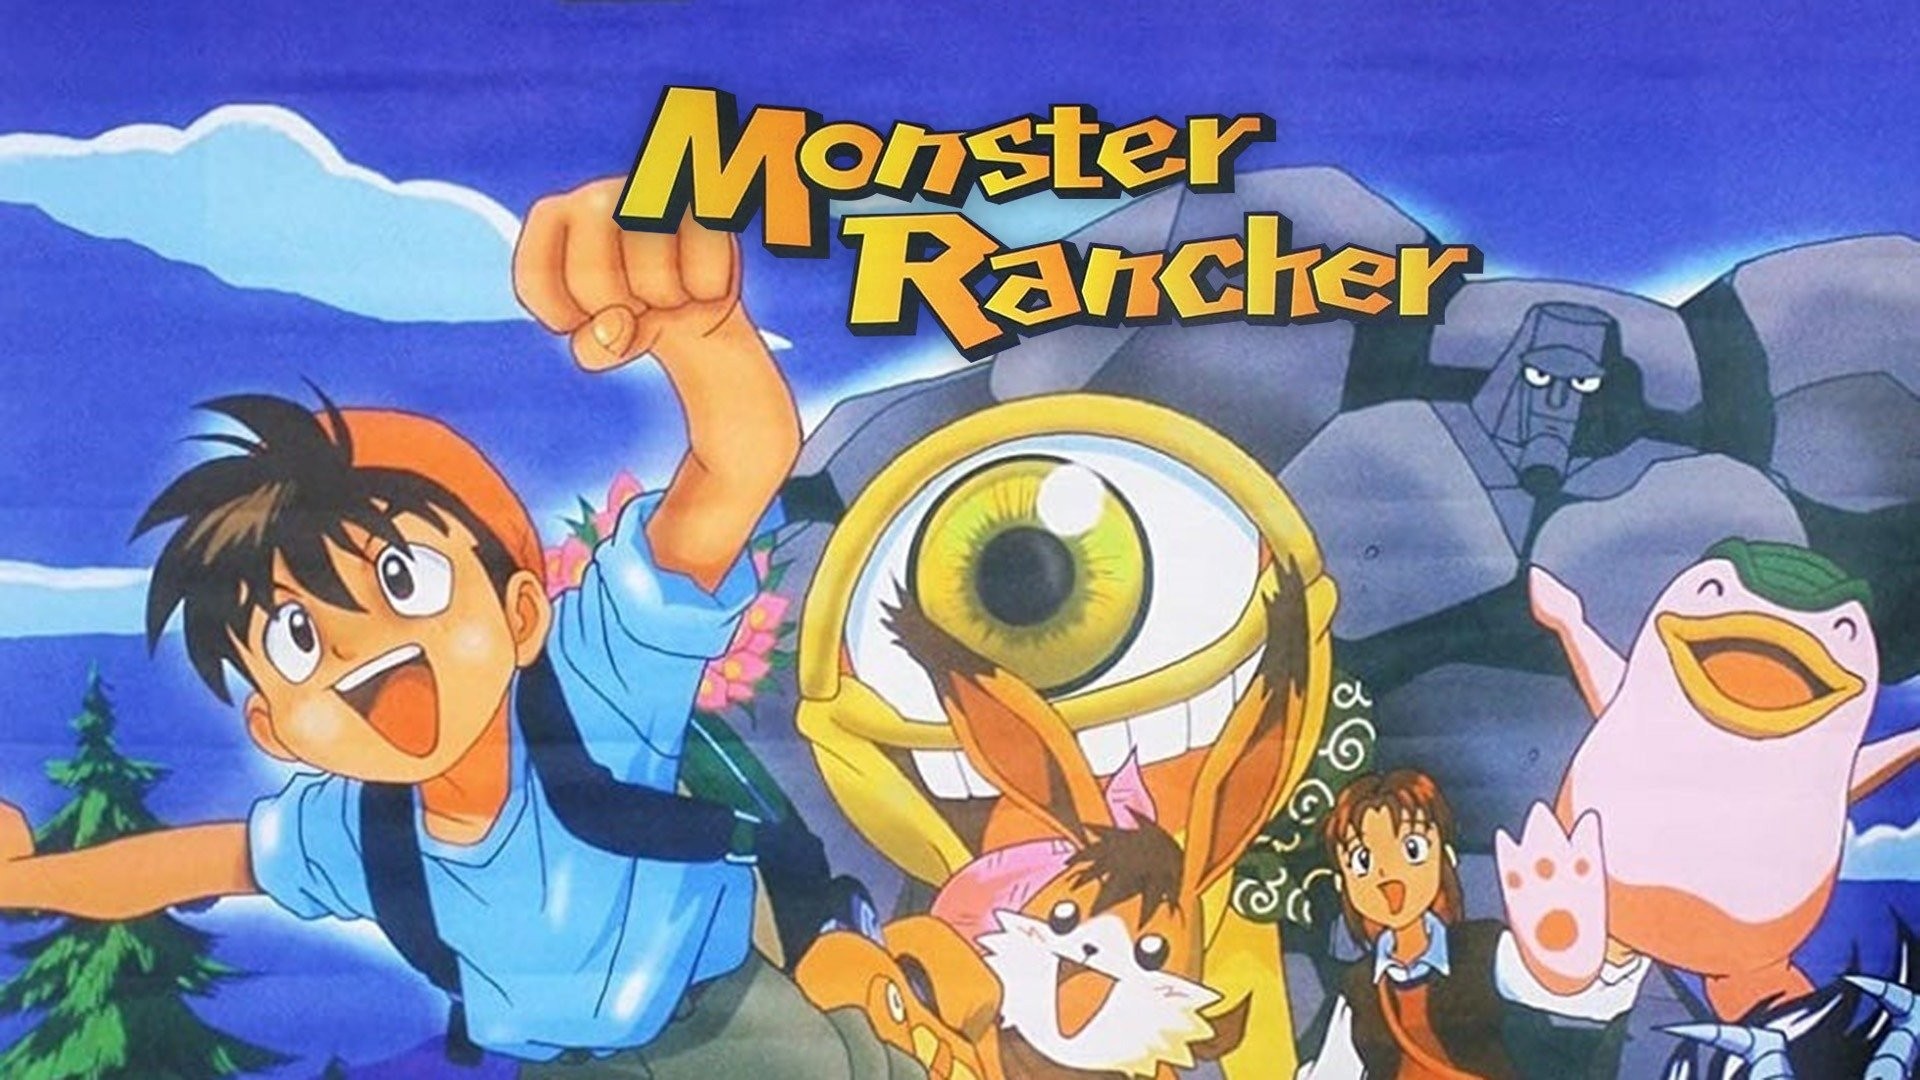 Monster Rancher (TV series) - Wikipedia